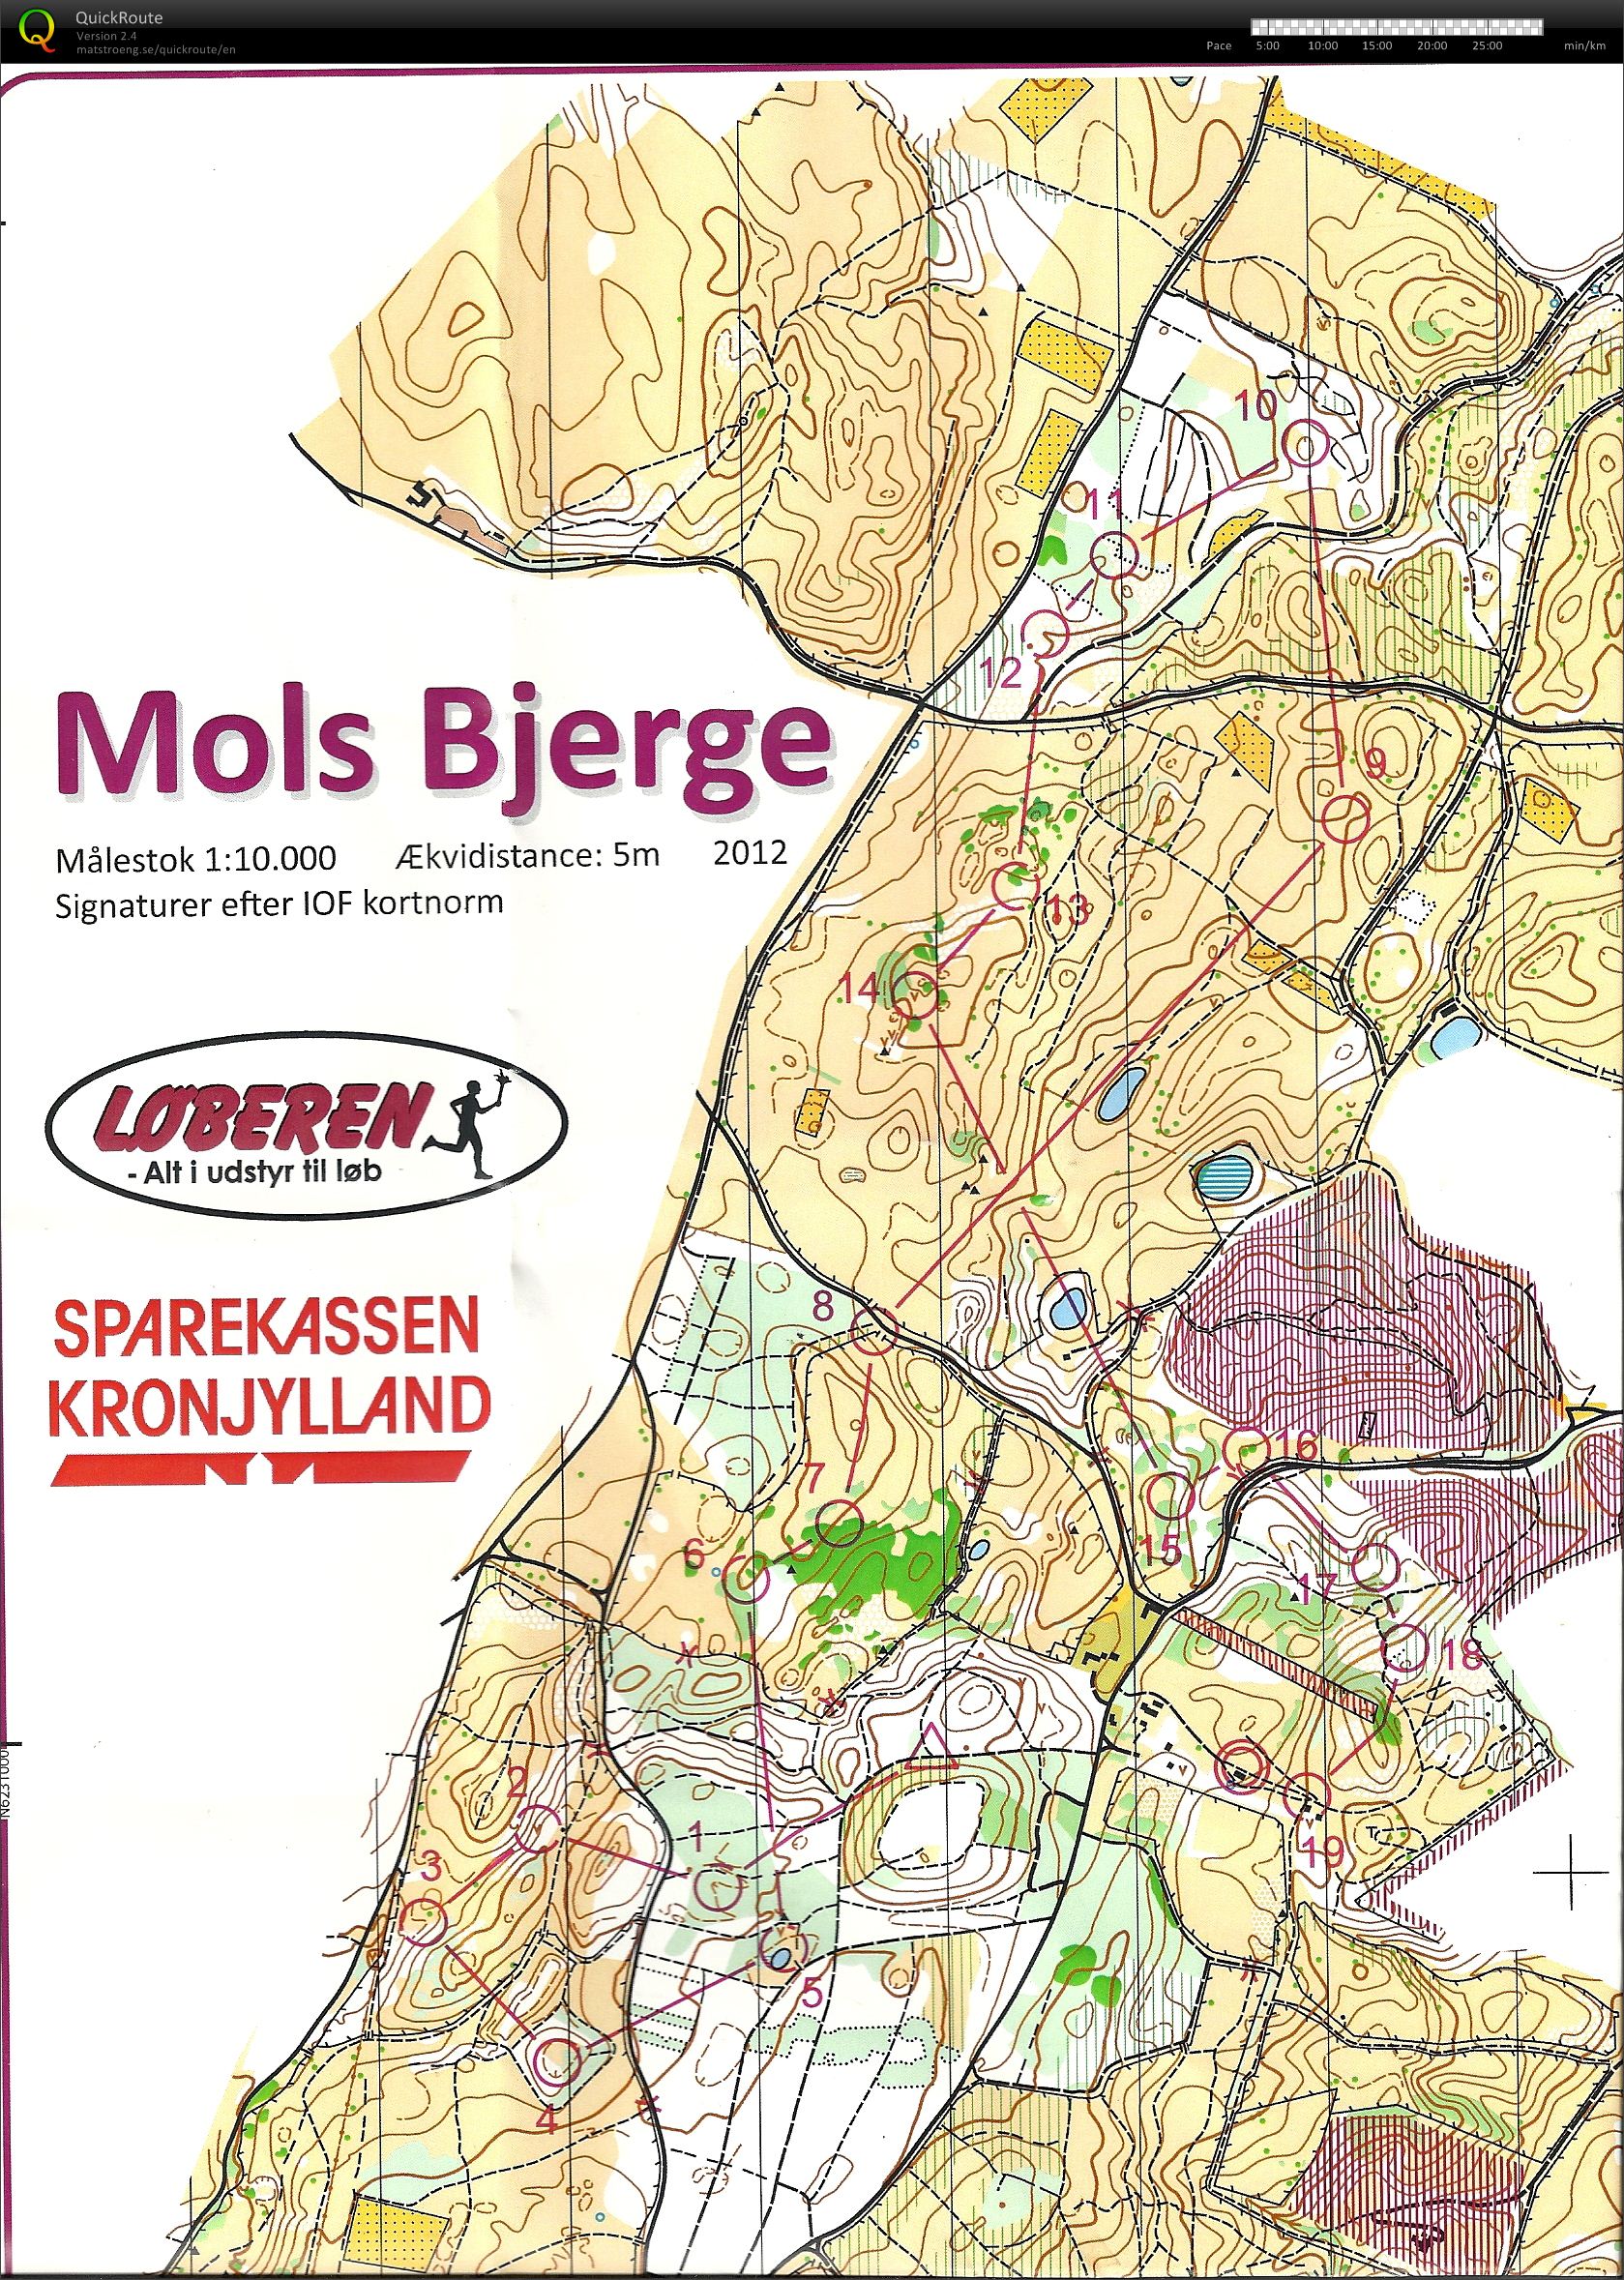 Mols Bjerge, JFM Lang, D45, LeneSN (19/08/2012)